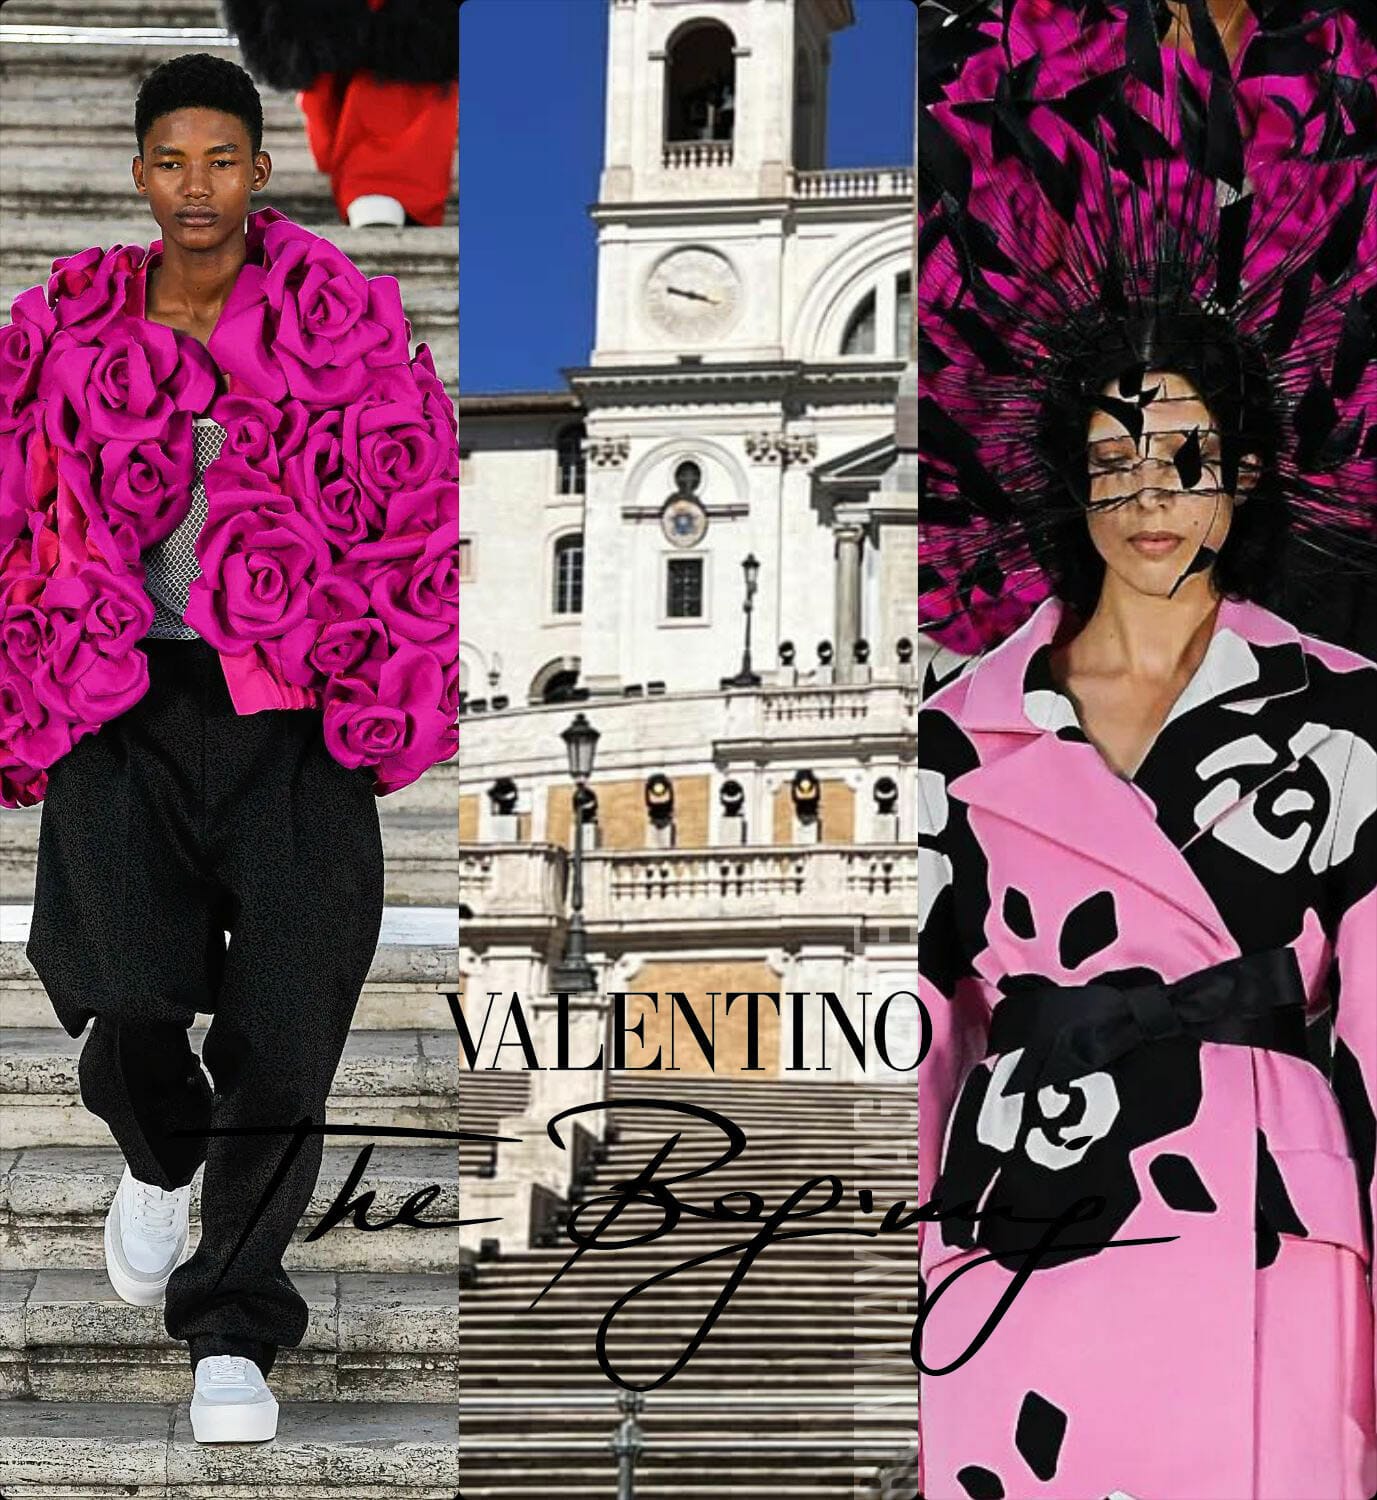 Valentino The Beginning Haute Couture Fall Winter 2022-2023. RUNWAY MAGAZINE ® Collections. RUNWAY NOW / RUNWAY NEW